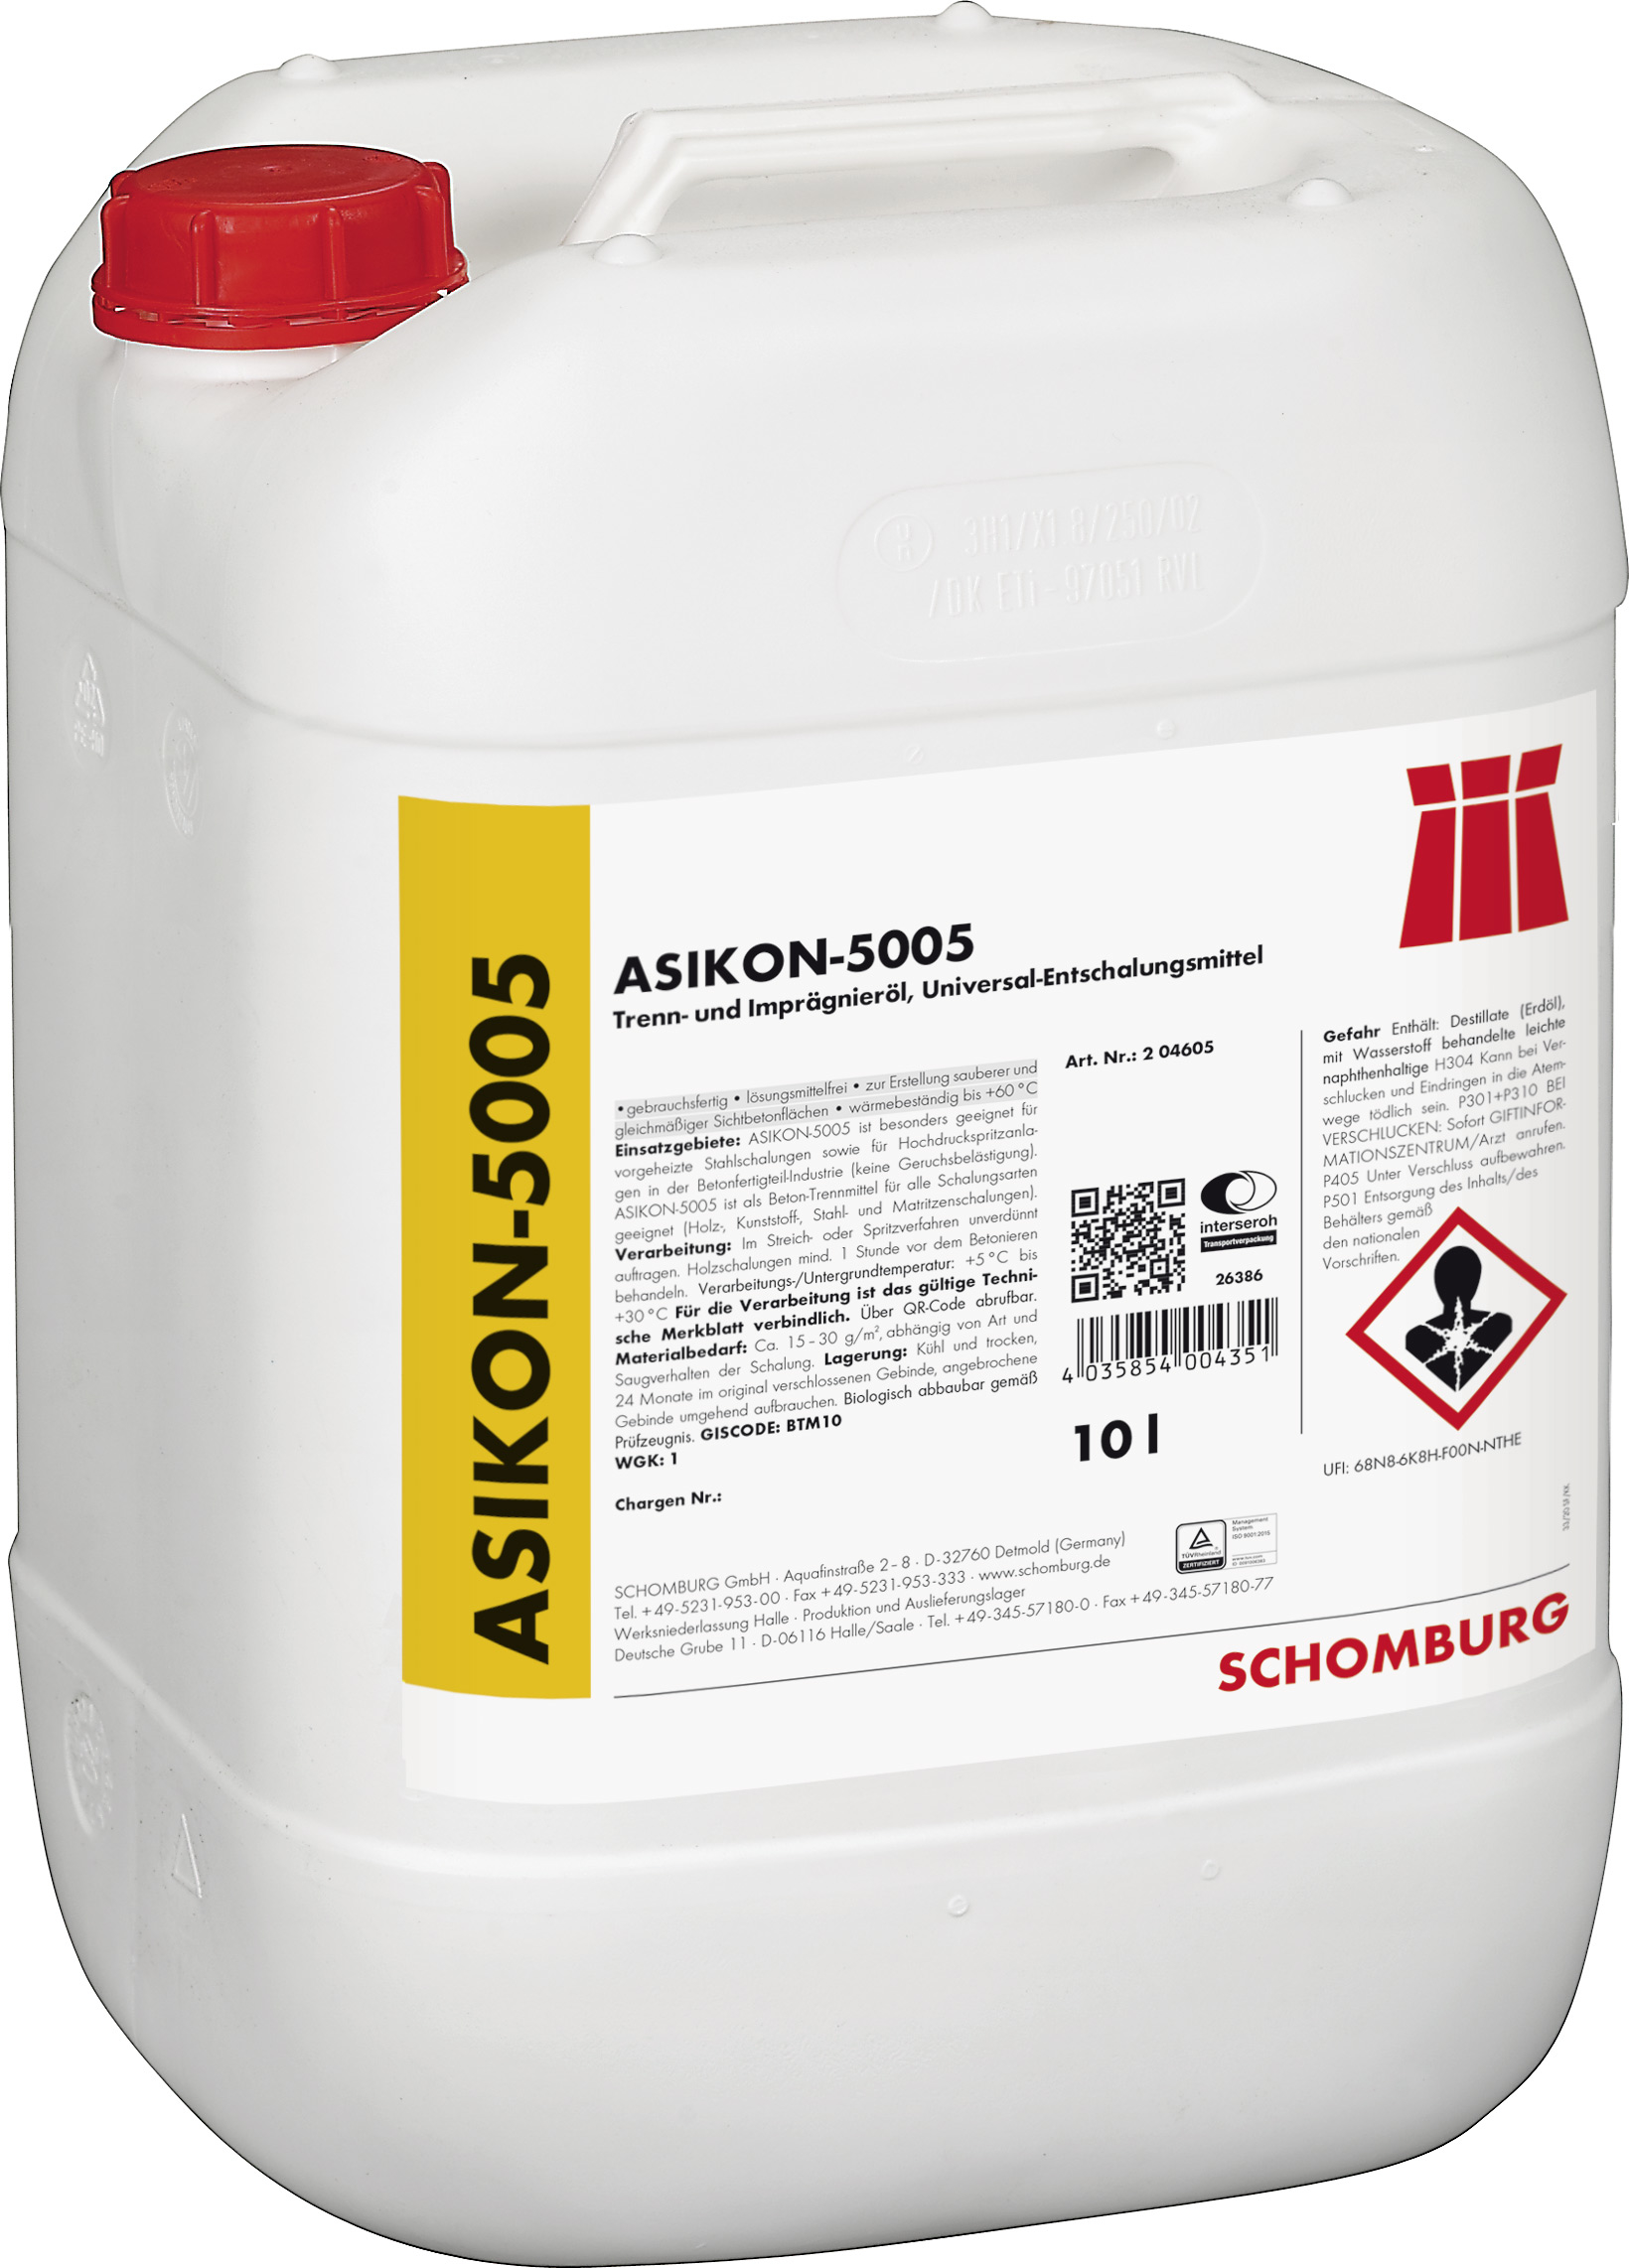 SCHOMBURG ASIKON-5005 Trenn- und Imprägnieröl 25l 